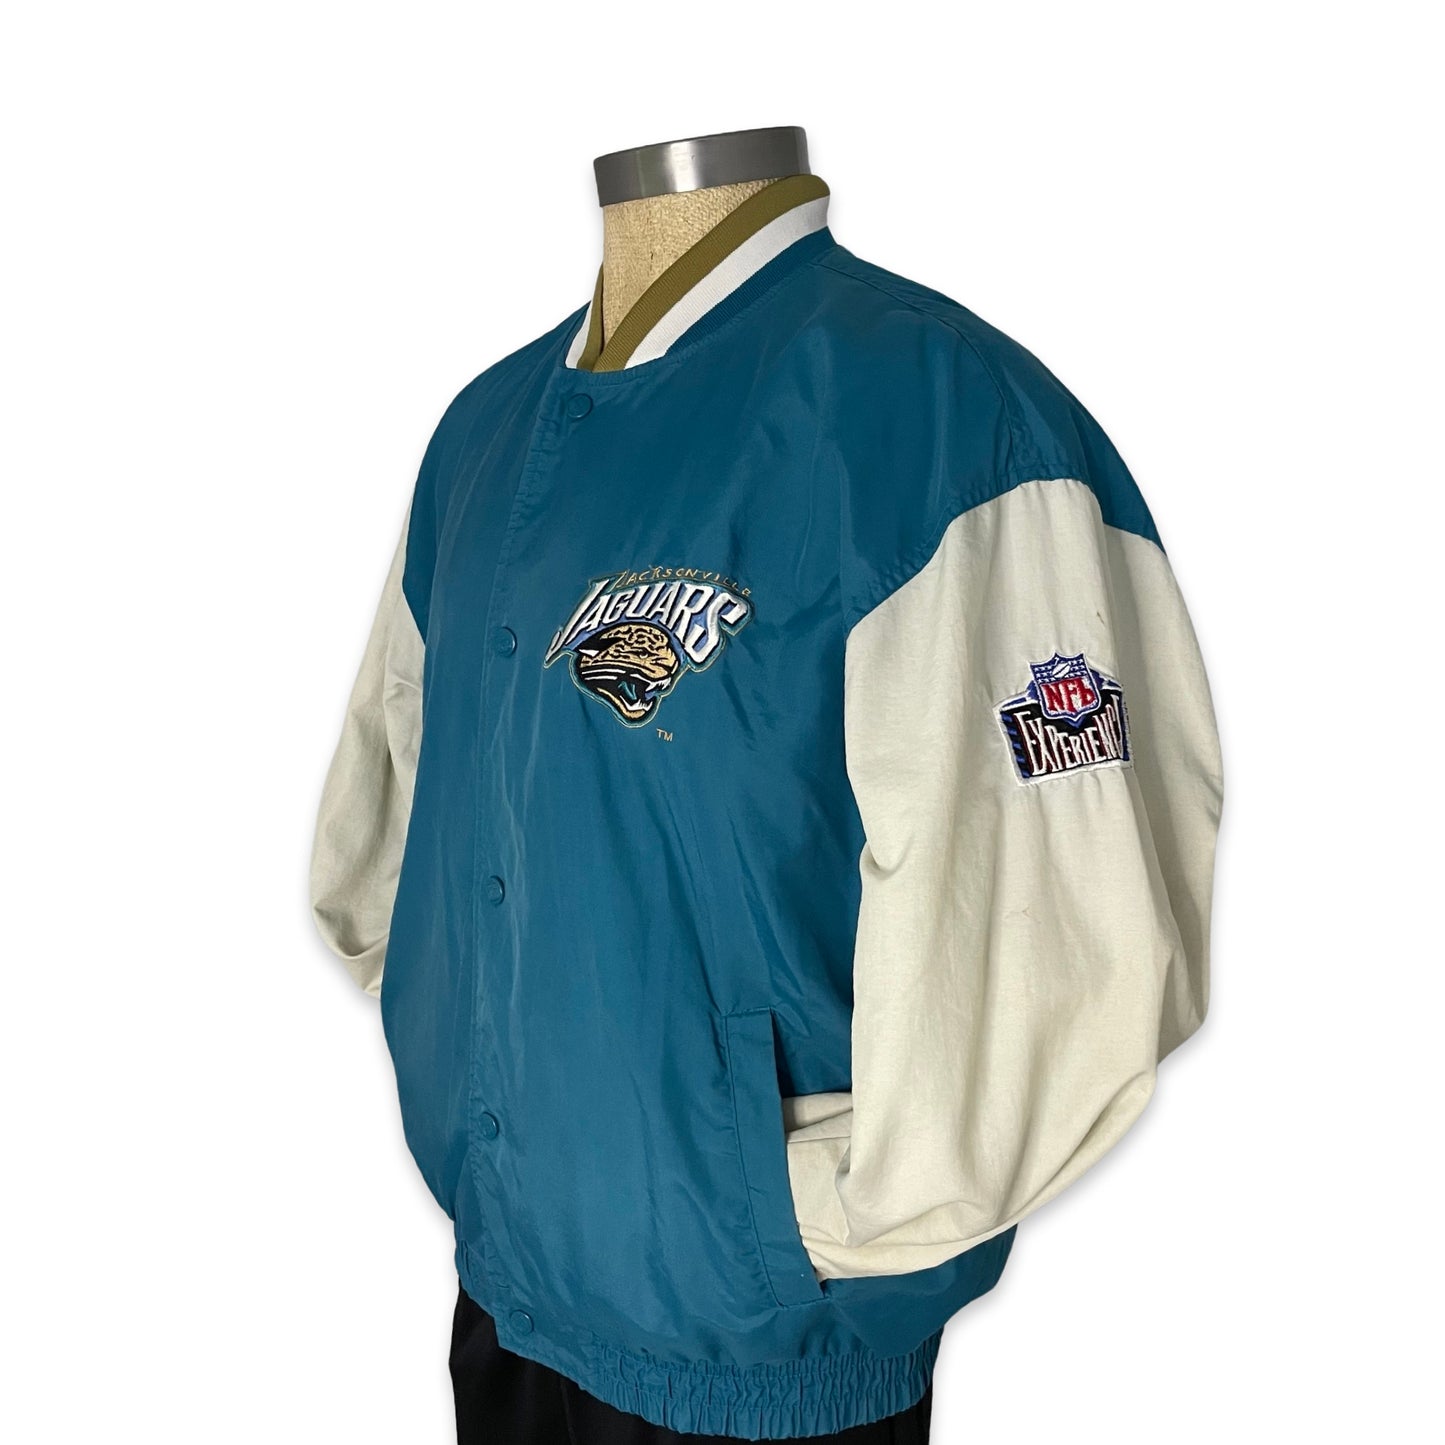 Vintage Jacksonville Jaguars PRO PLAYER varsity jacket size MEDIUM